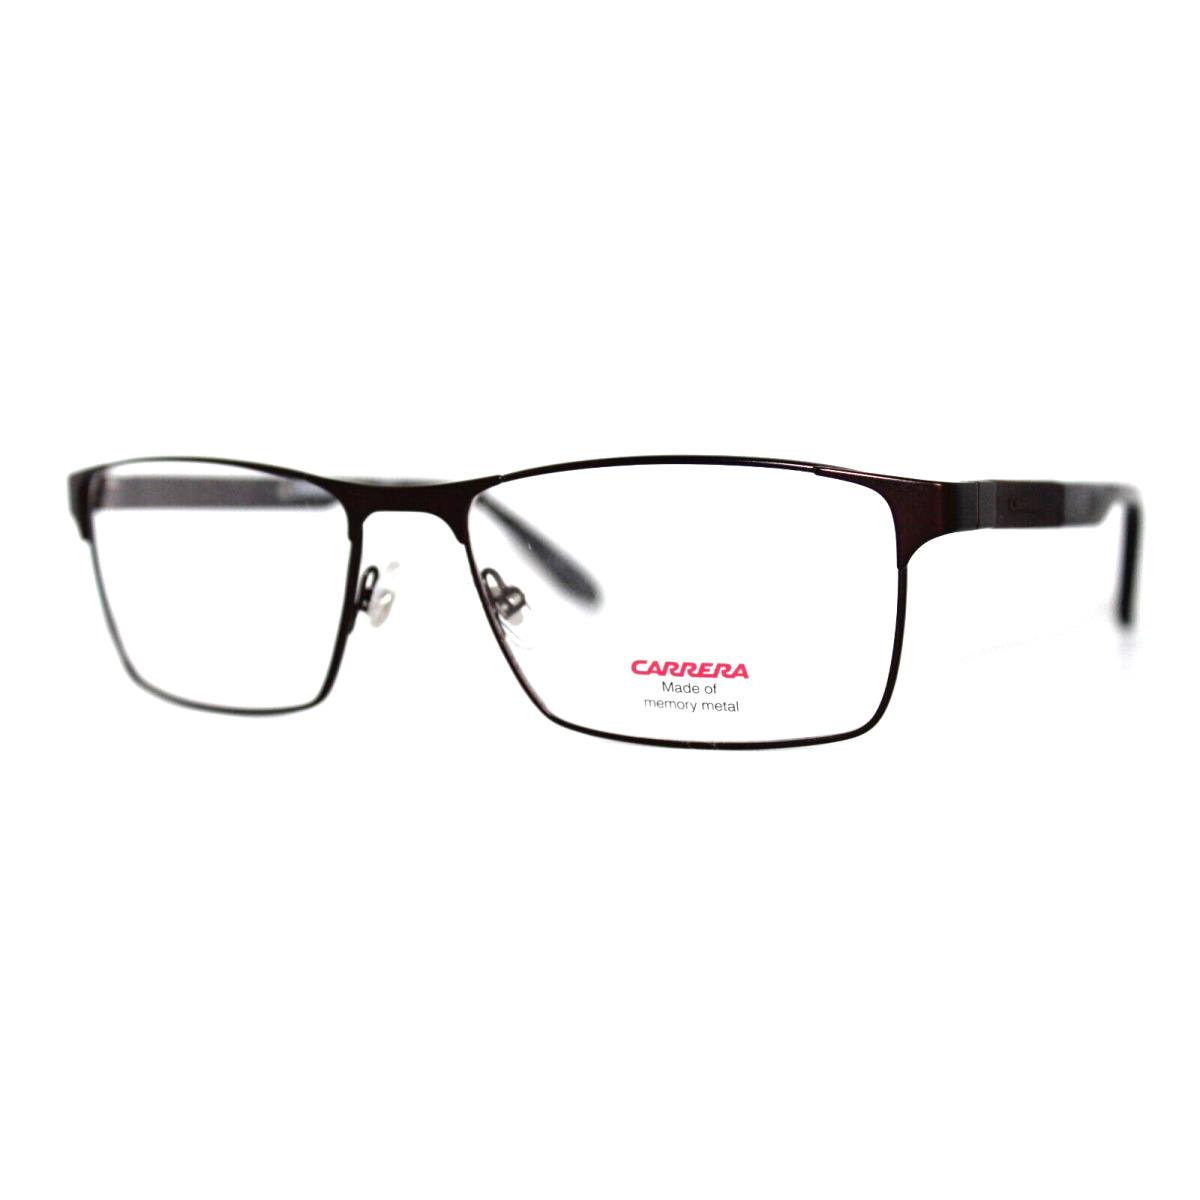 Carrera 8822 YZ4 Matte Brown Eyeglasses Frames 56-17-140MM W/case - Brown, Frame: Brown